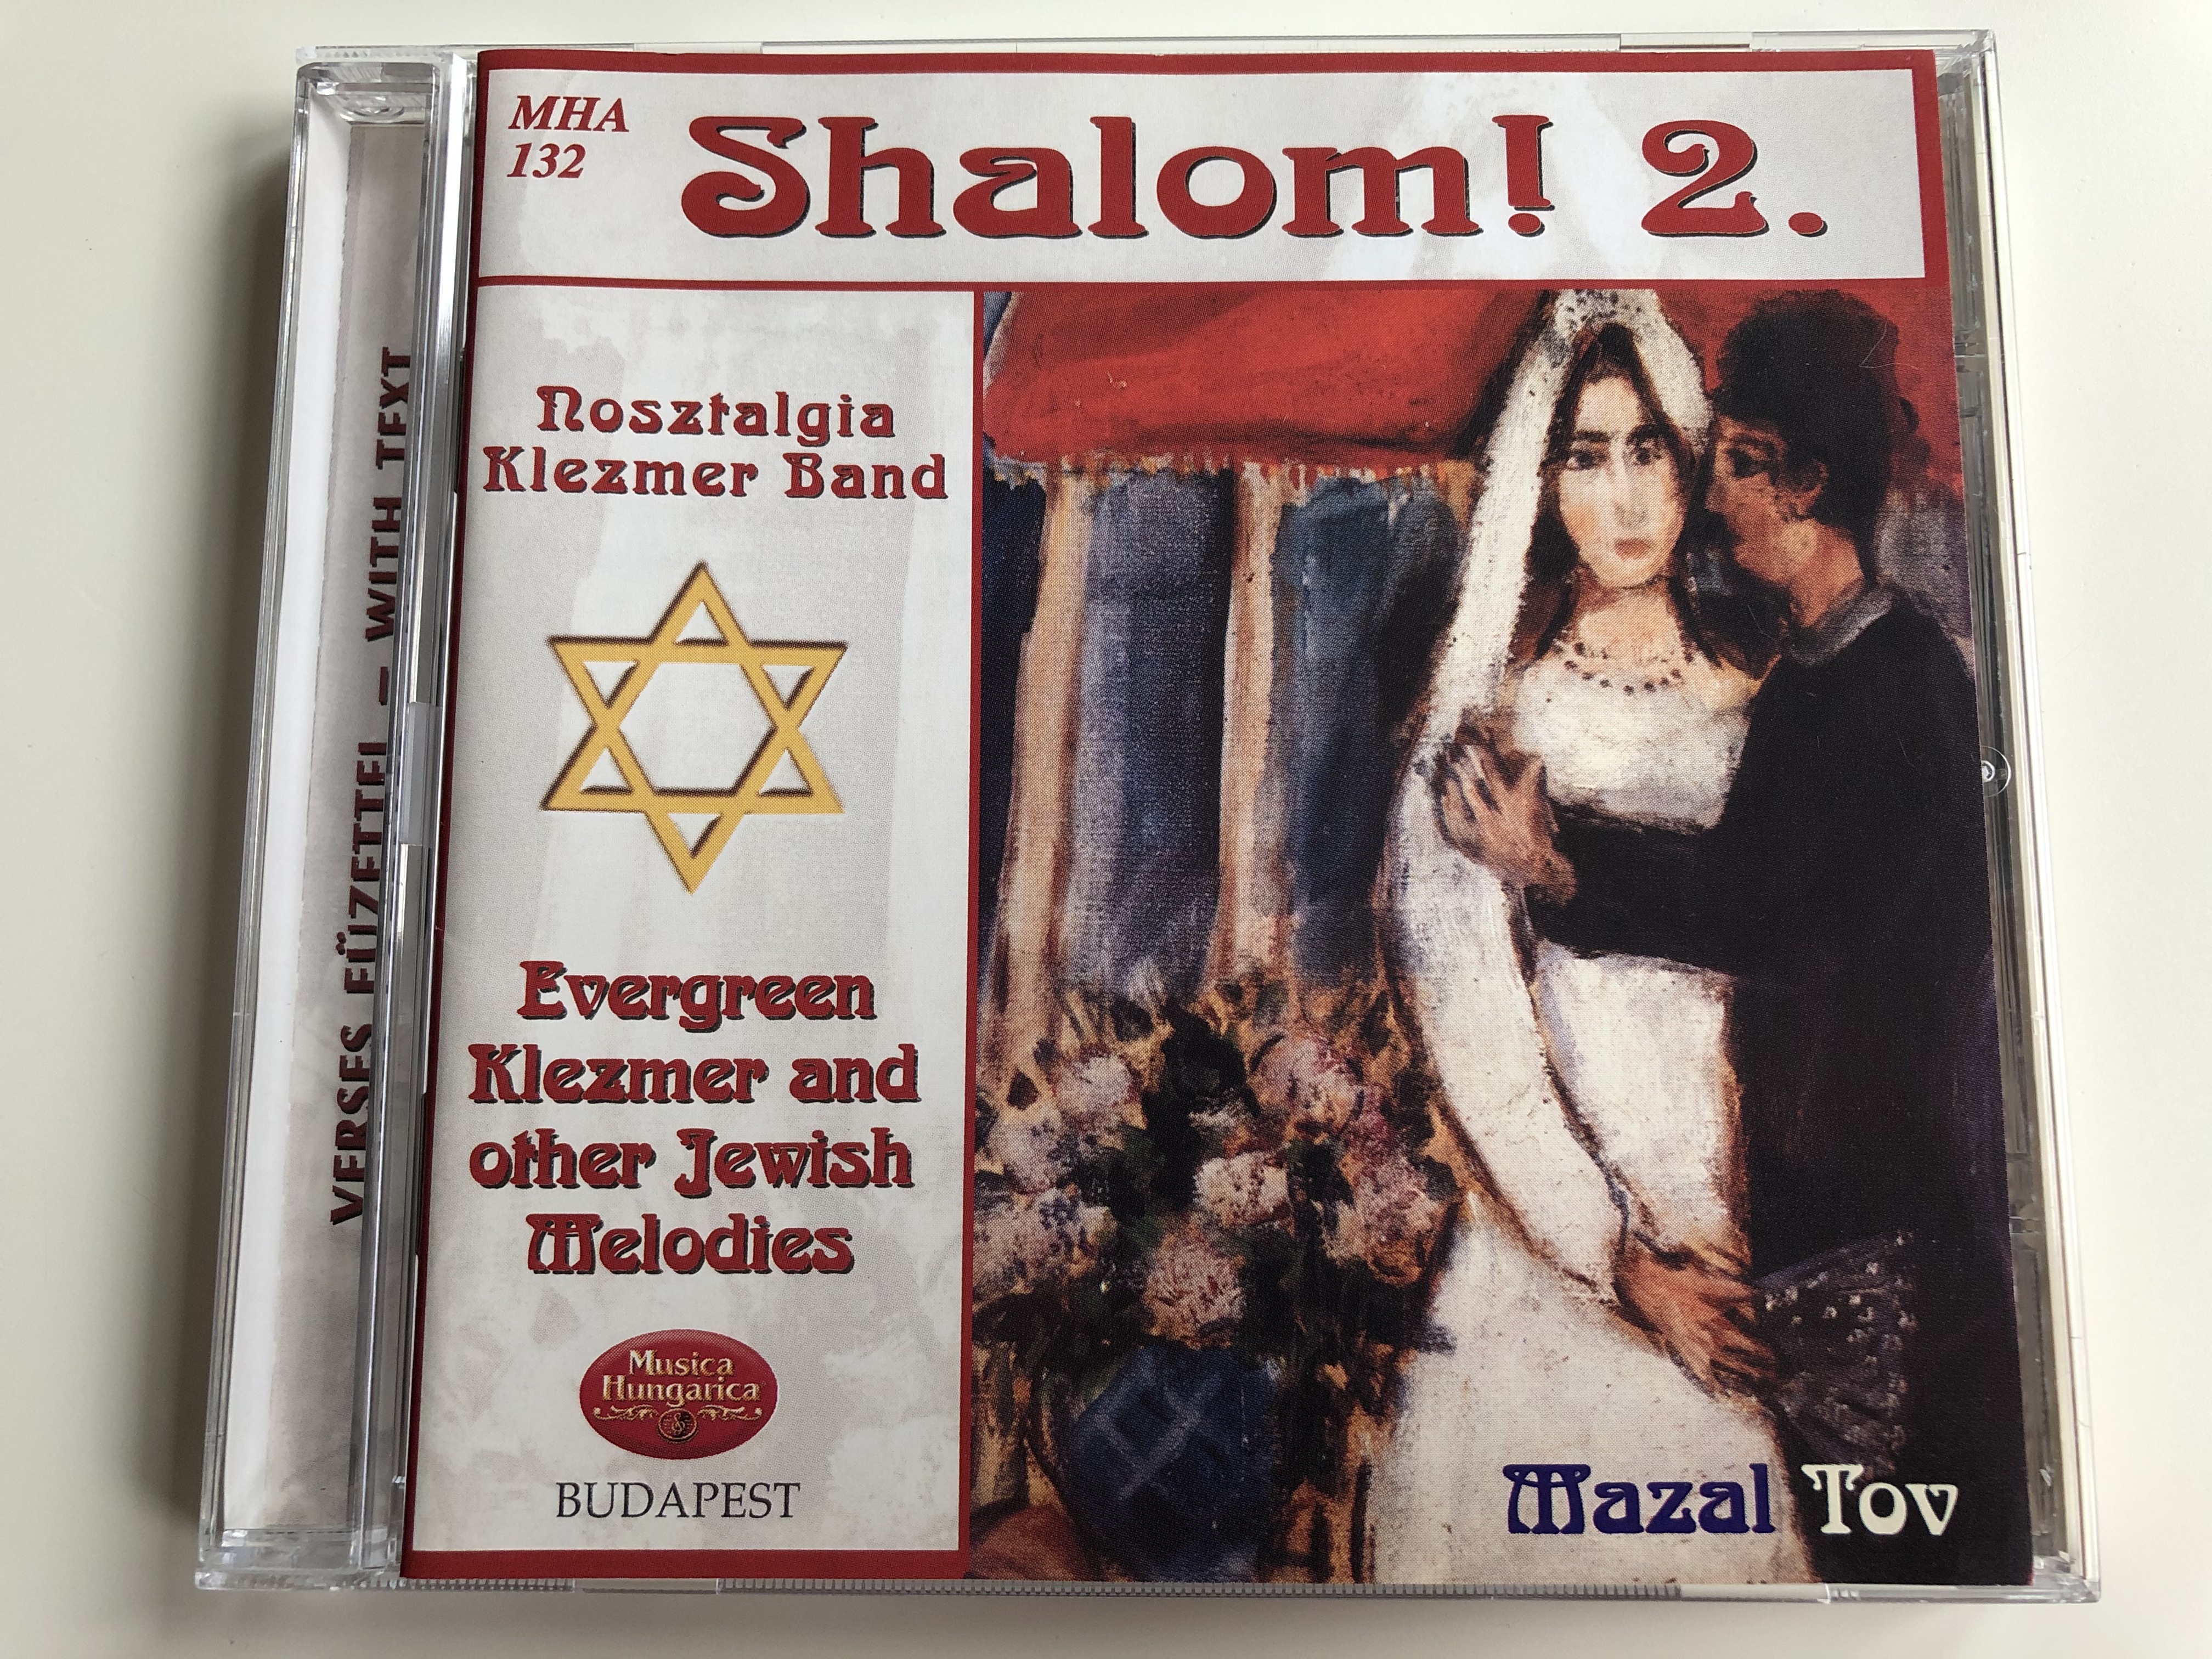 shalom-2.-nosztalgia-klezmer-band-evergreen-klezmer-and-other-jewish-melodies-mazal-tov-musica-hungarica-audio-cd-2000-stereo-mha-132-1-.jpg